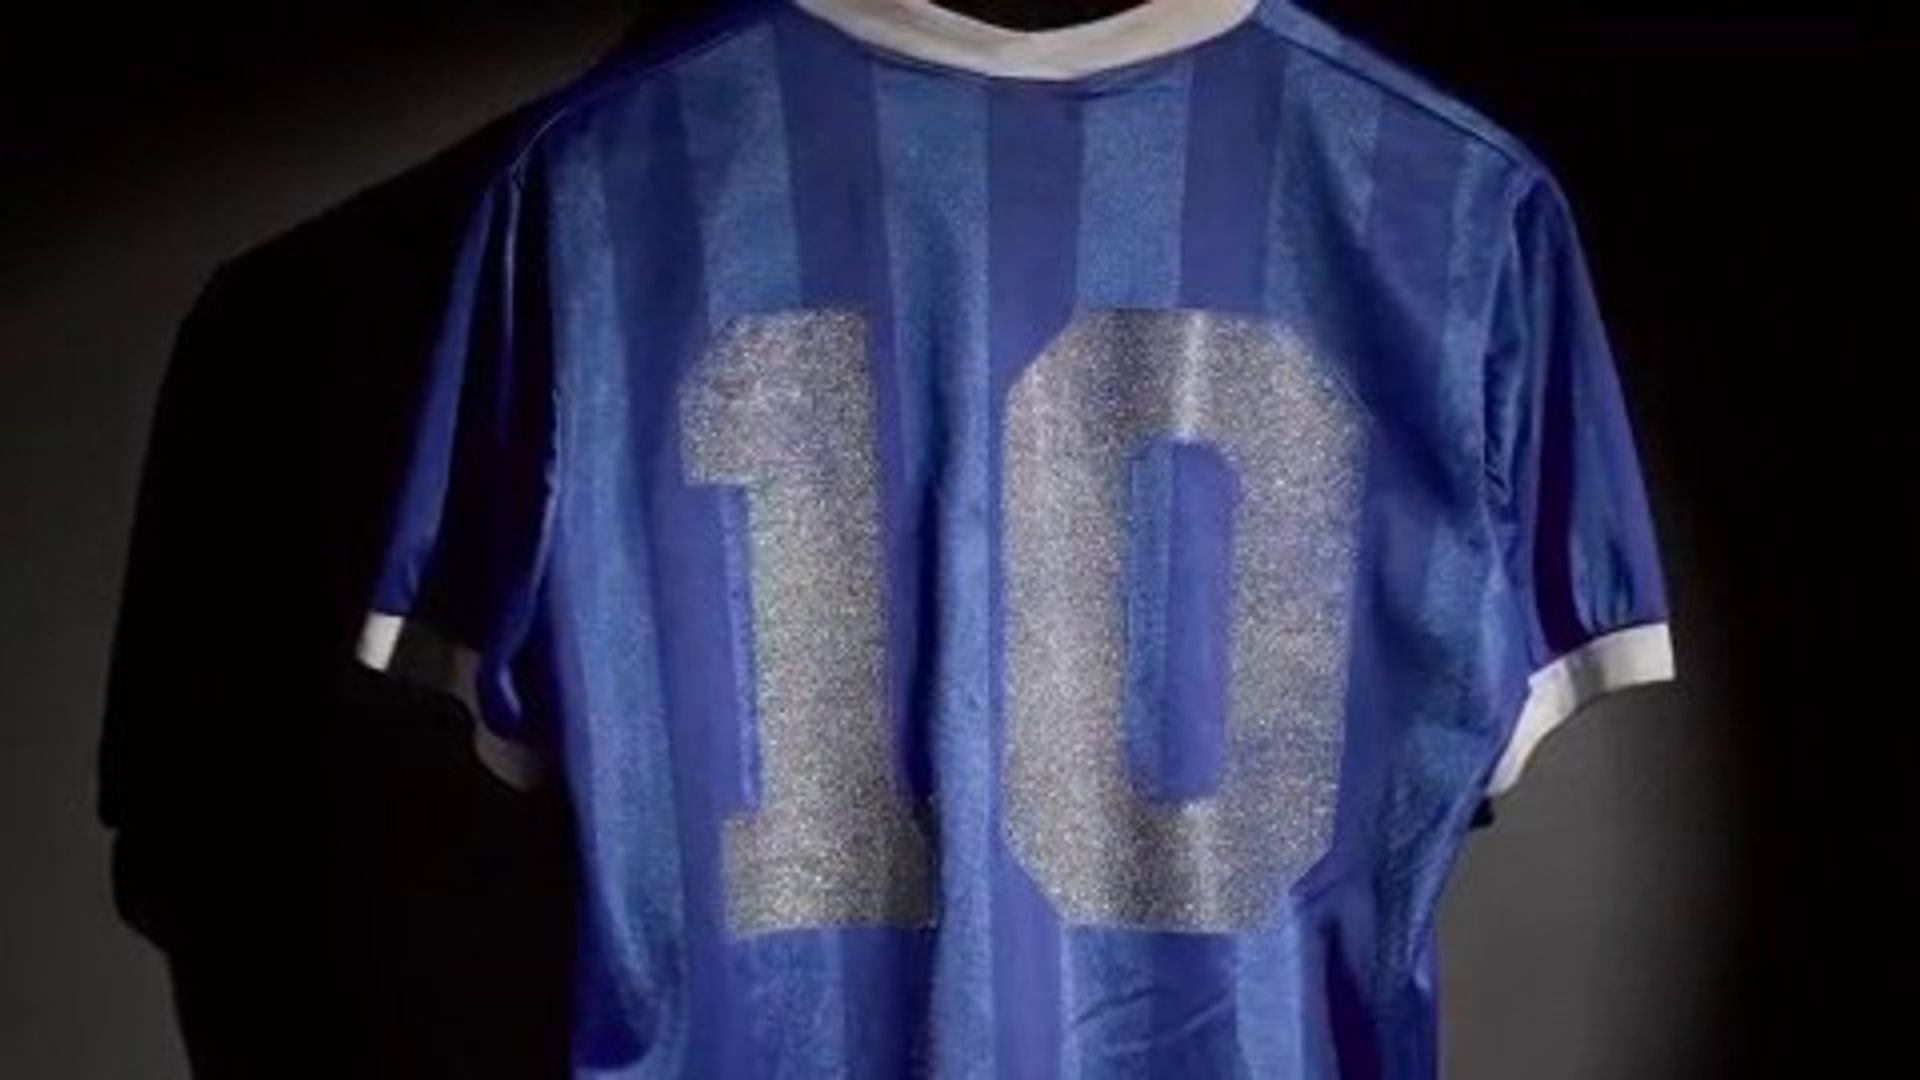 Maradona 'Hand of God' shirt sells for £7m at auction